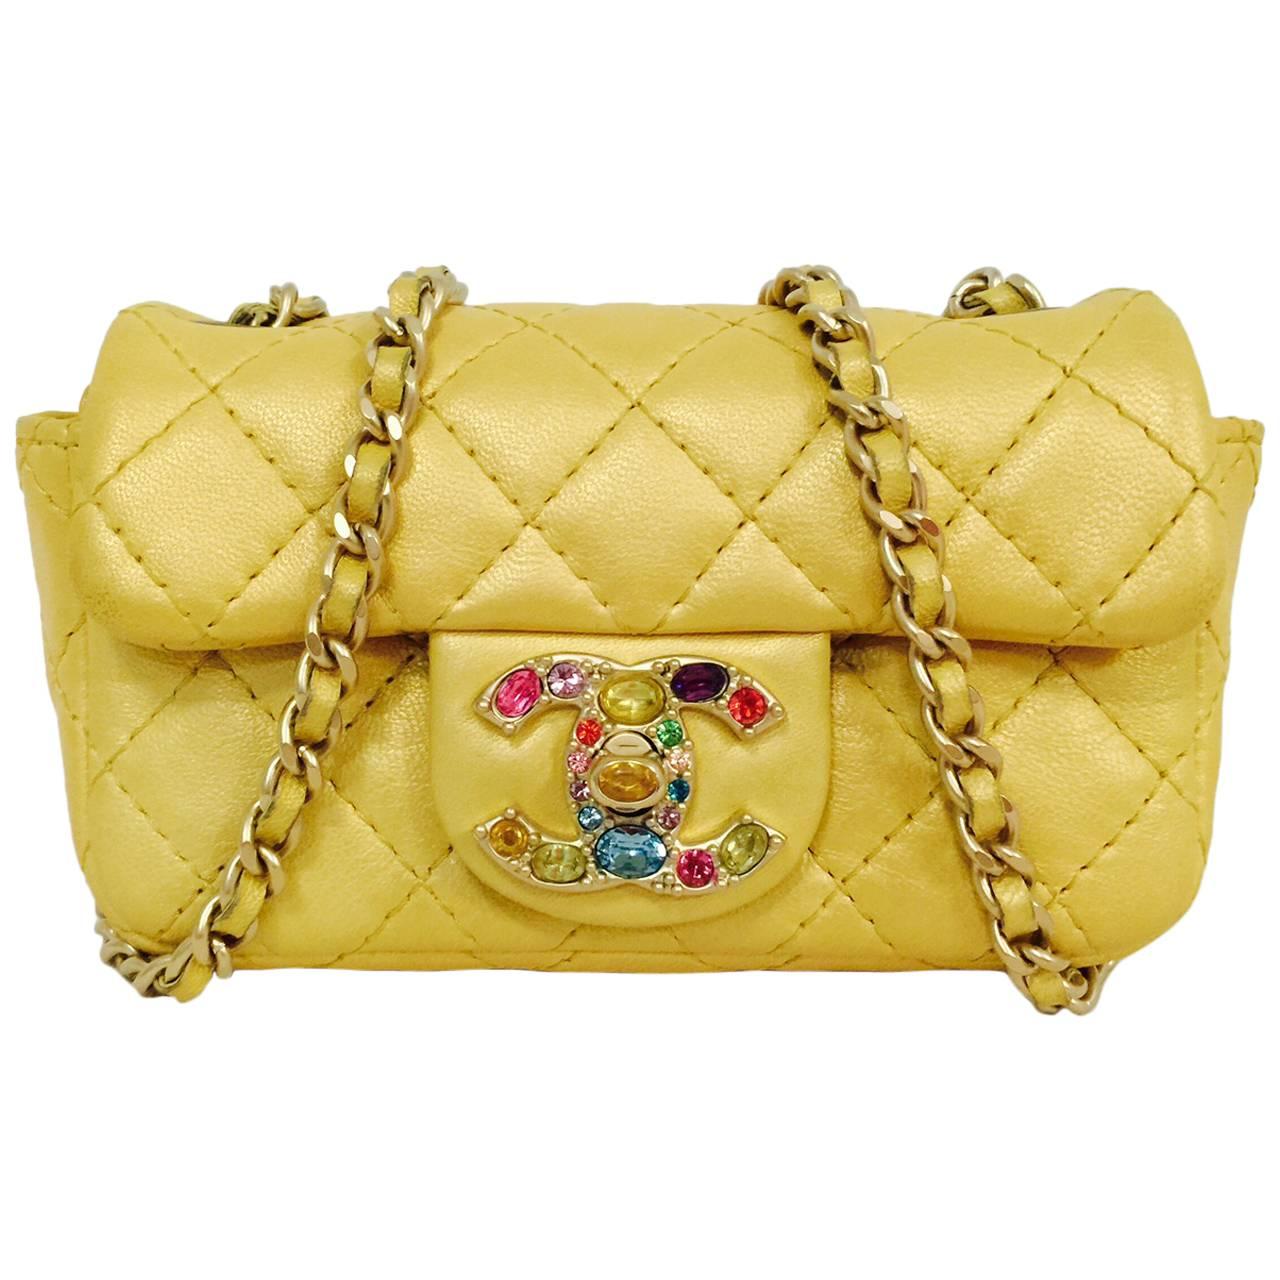 New Chanel Gold Metallic Ltd Edition Mini Flap Bag With Jeweled Closure 14671349